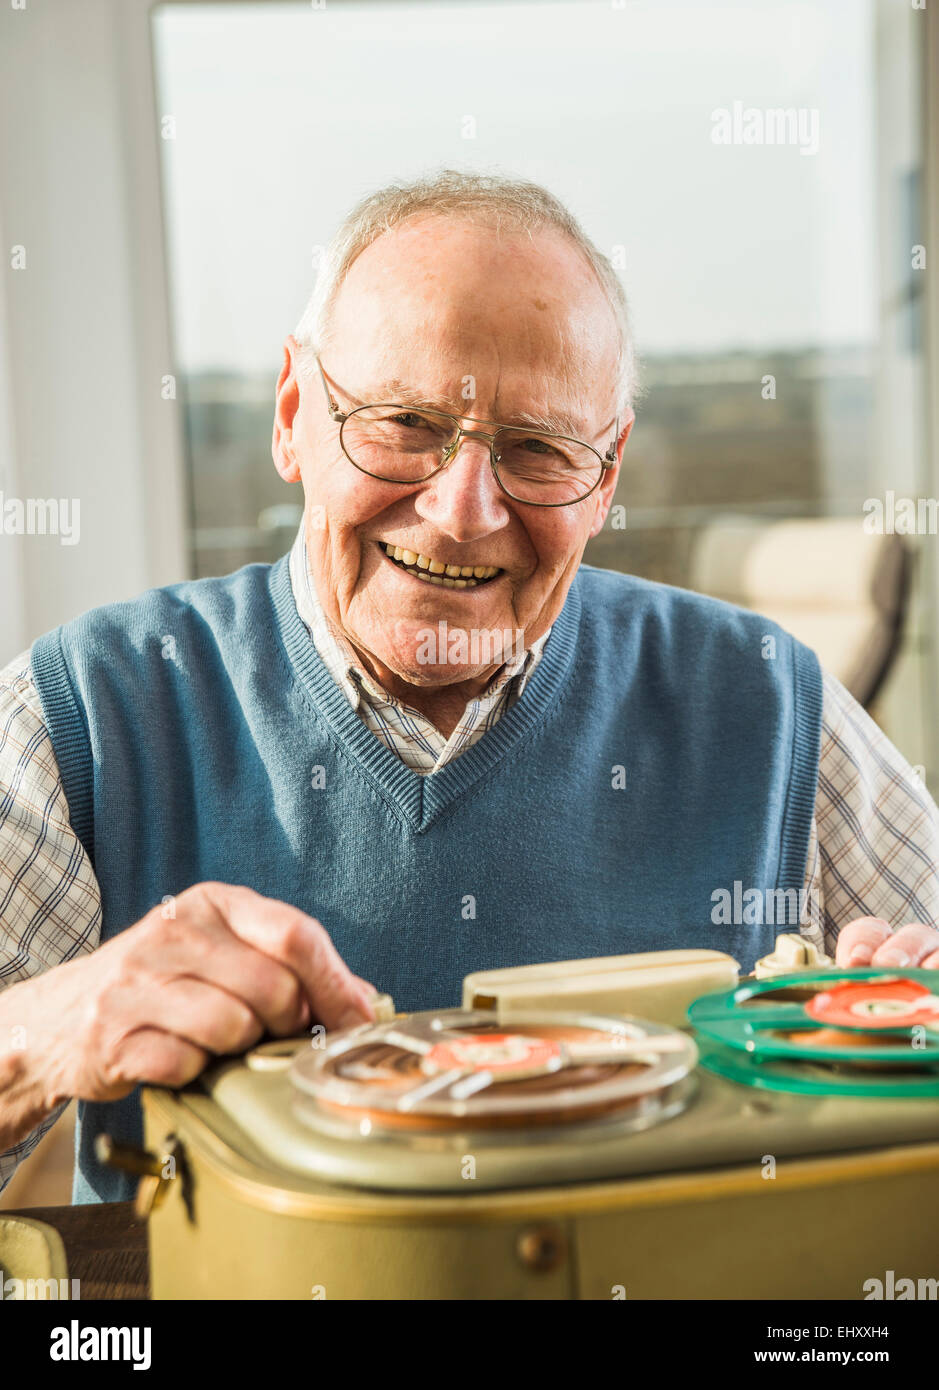 Smiling senior man operating old-fashioned recorder Stock Photo